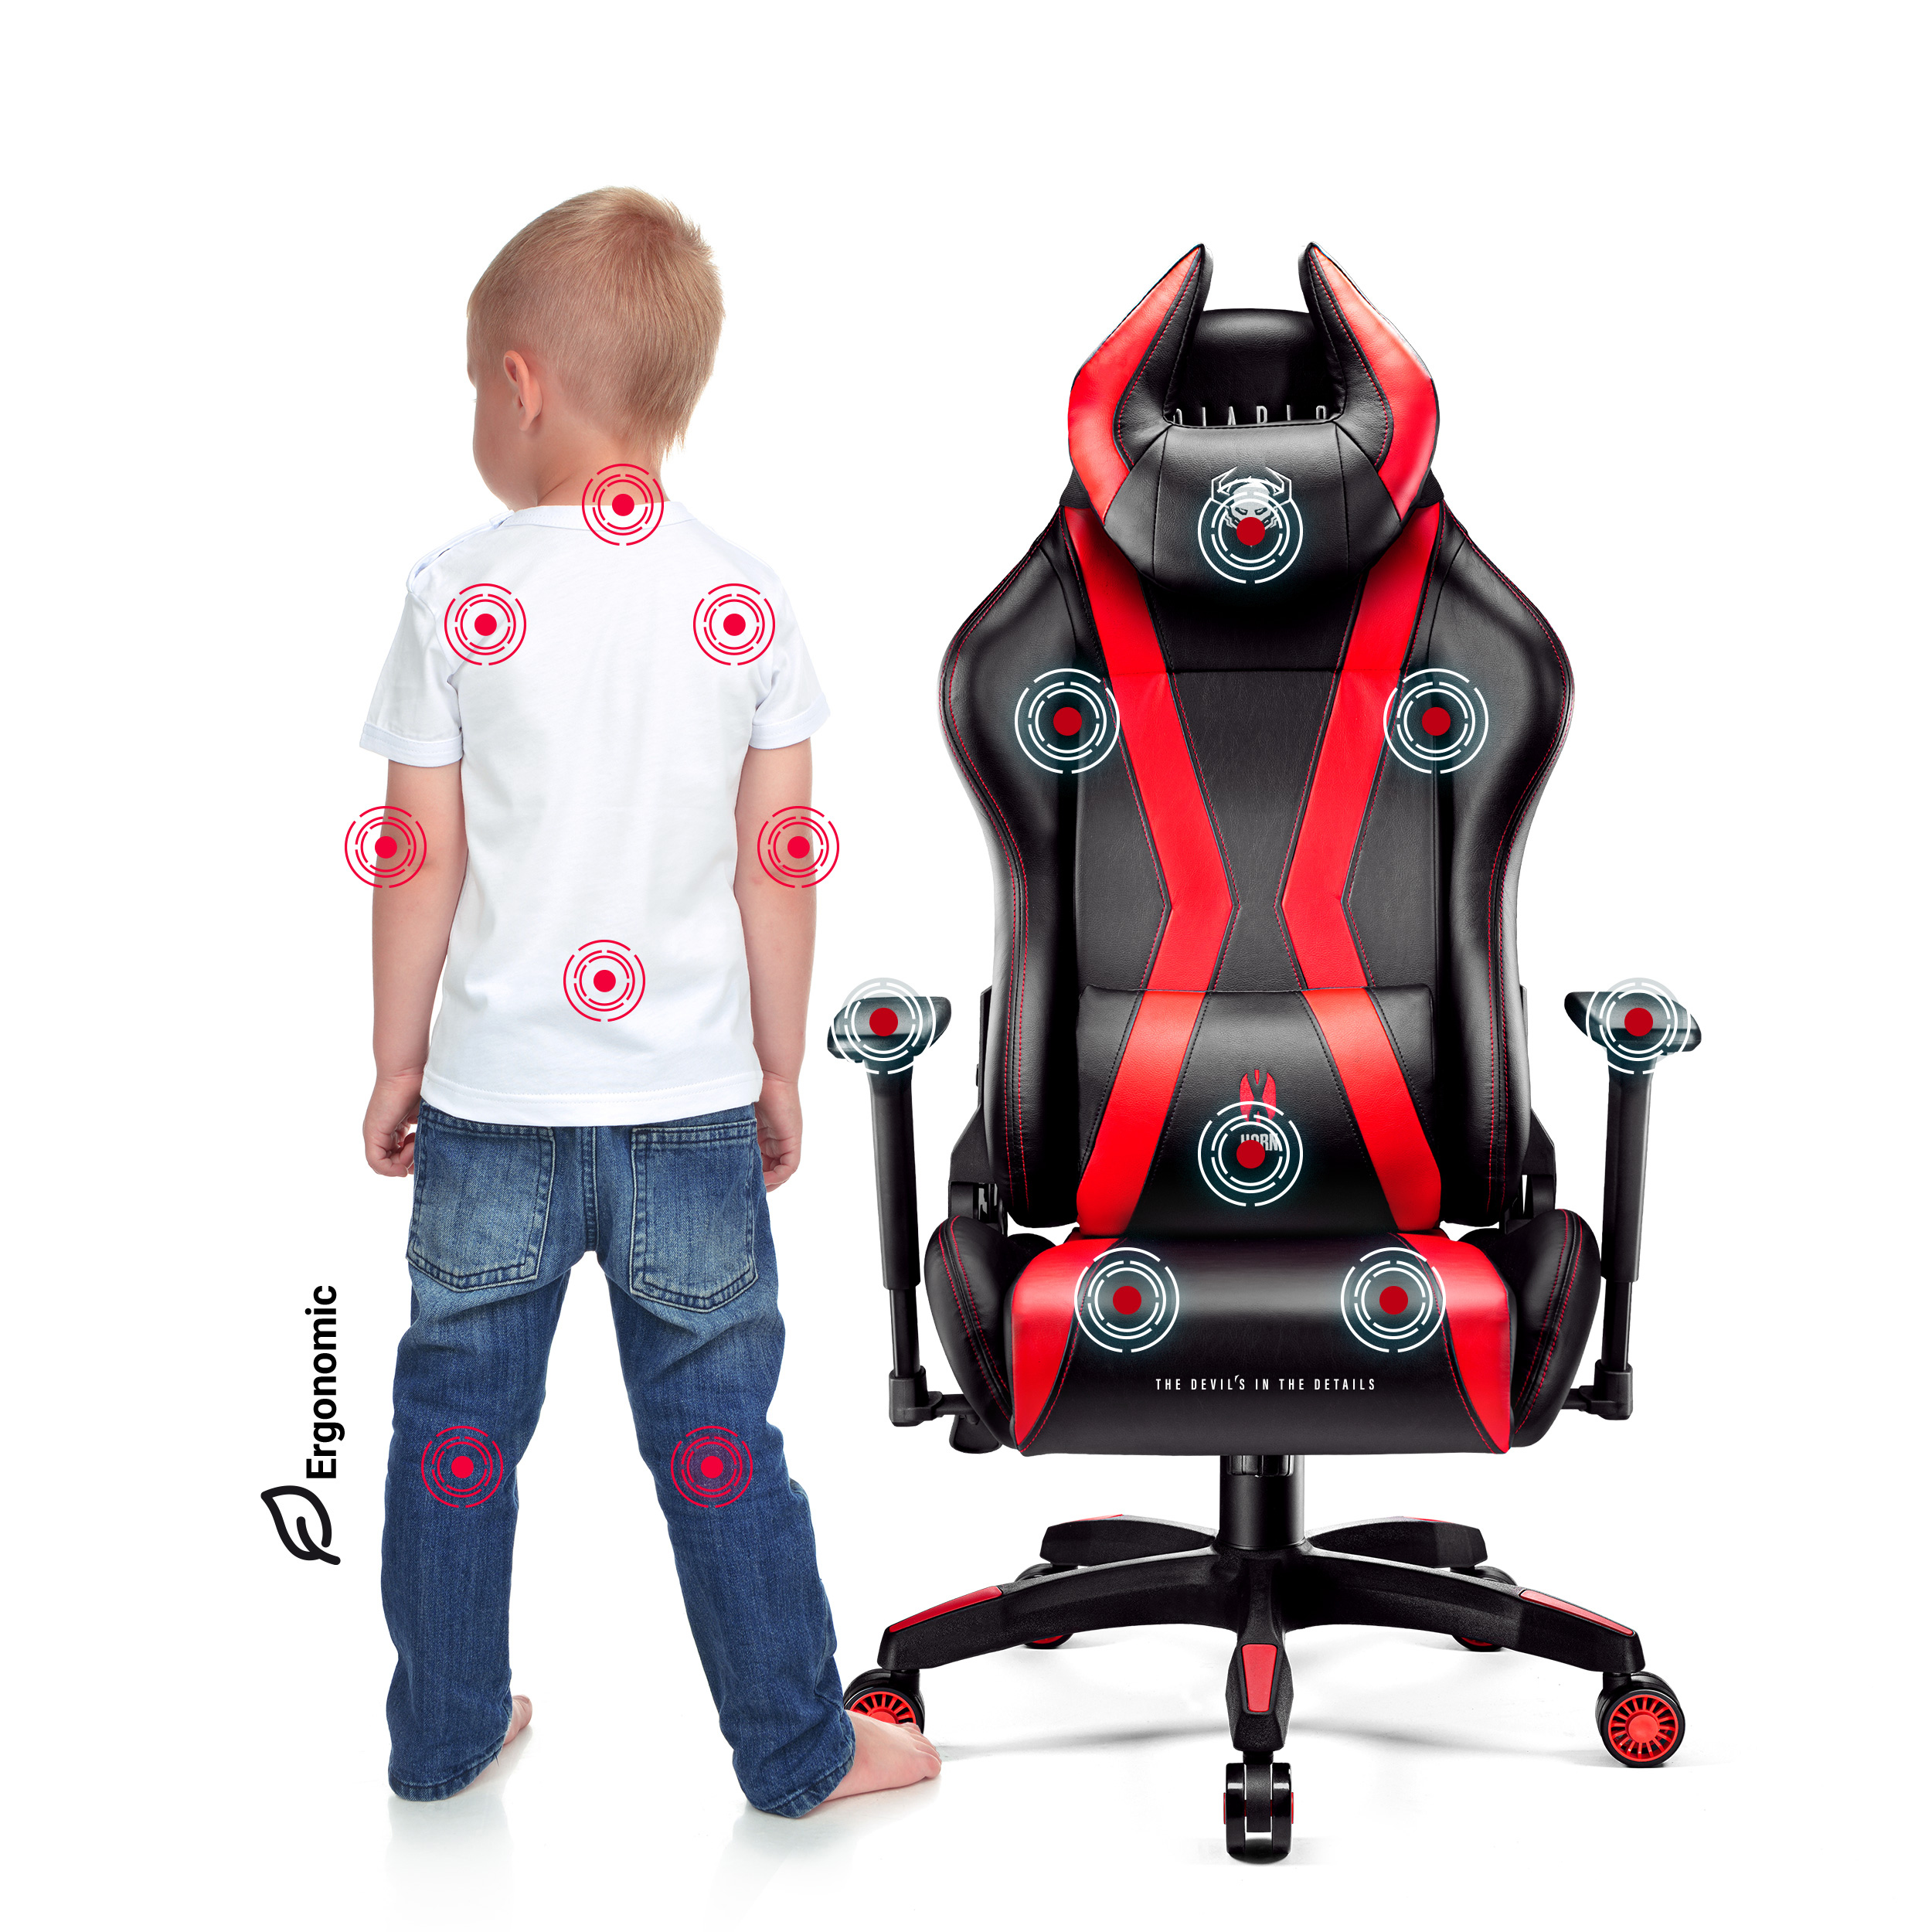 DIABLO CHAIRS GAMING STUHL X-HORN black/red Gaming KIDS Chair, 2.0